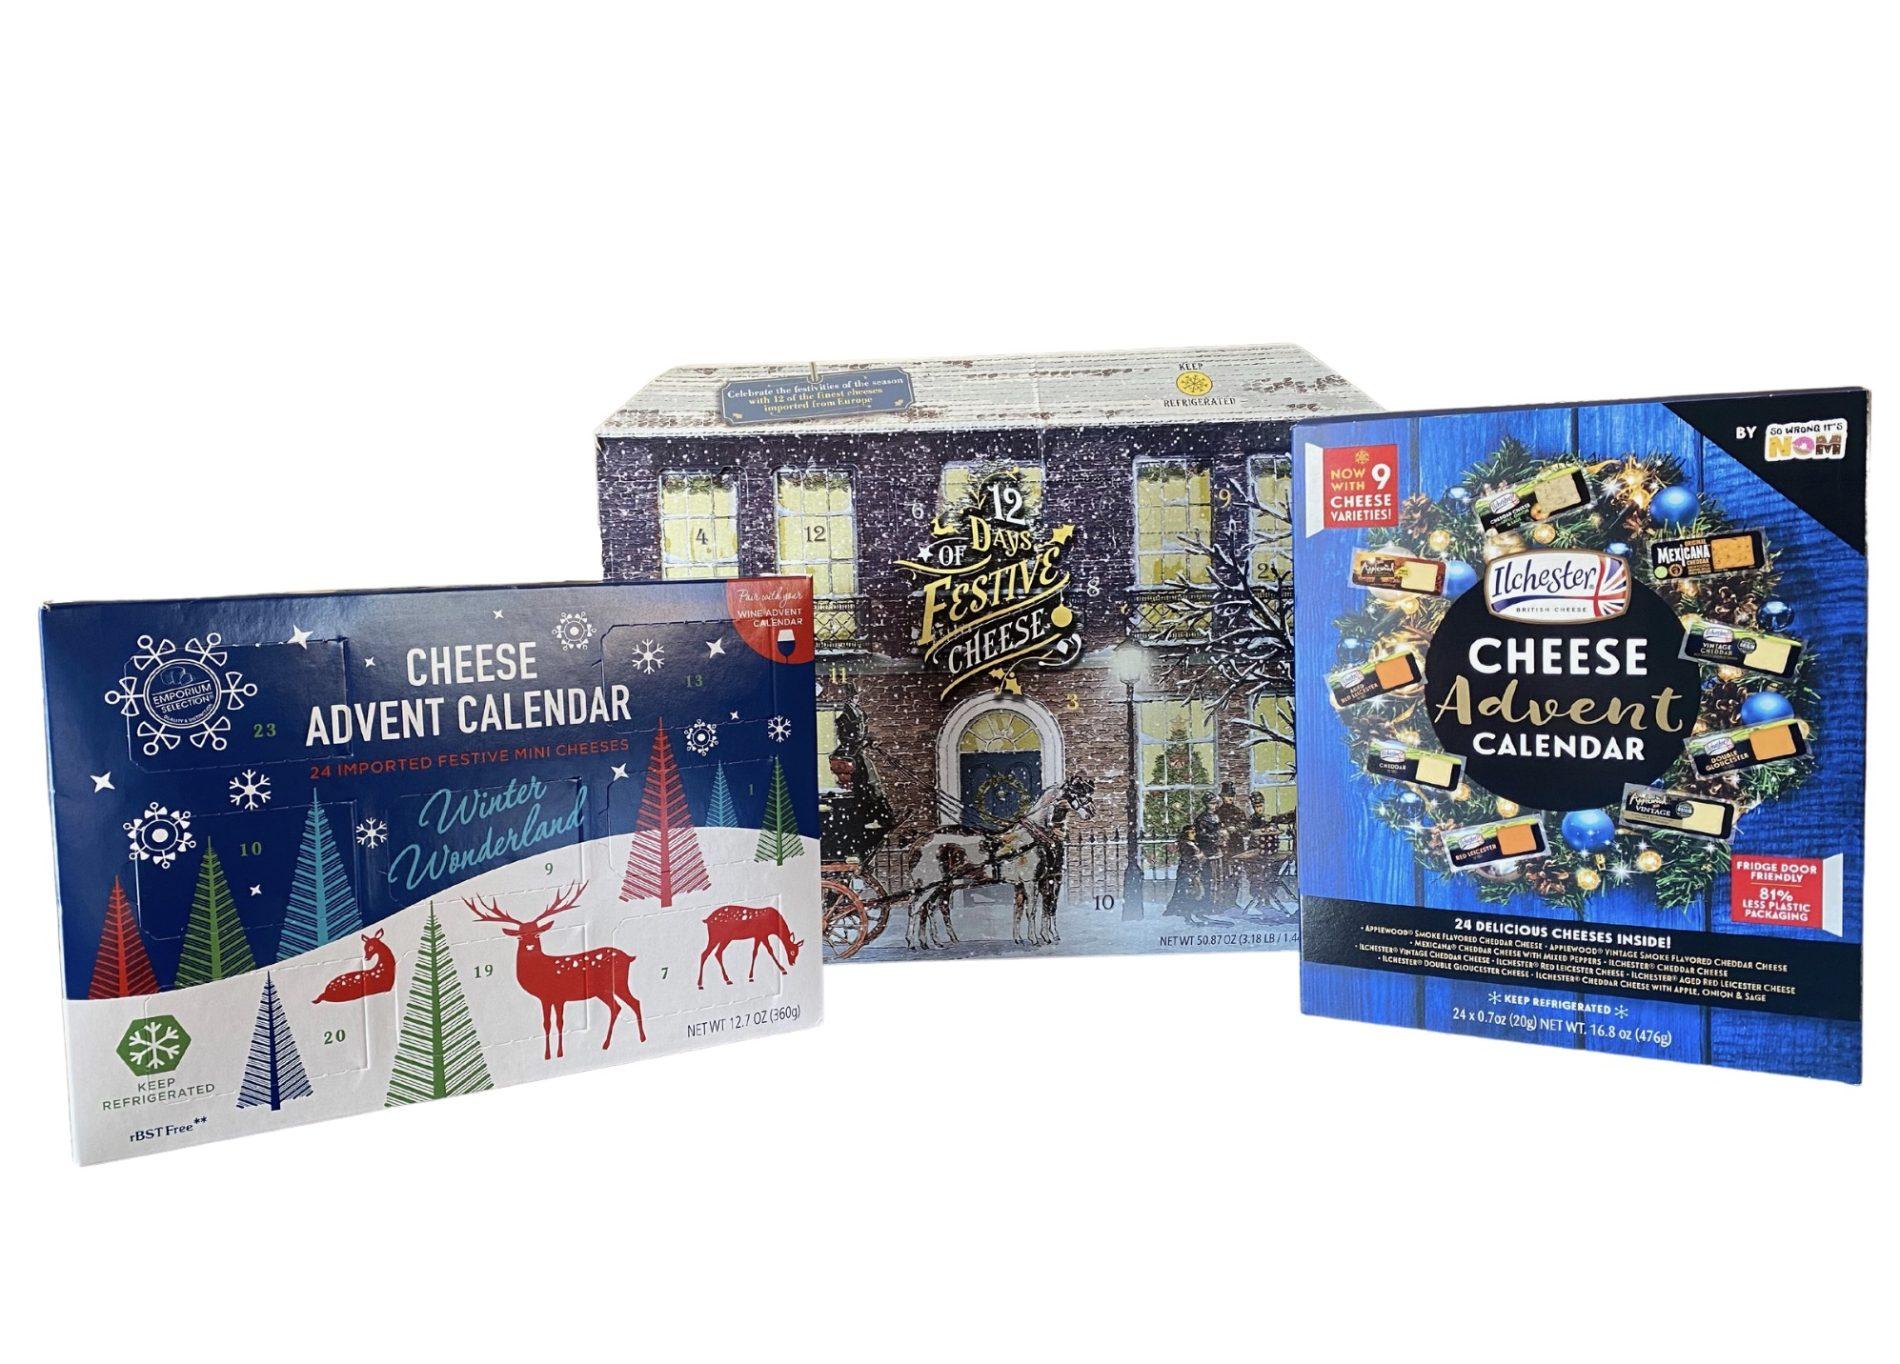 Cheese Advent Calendar Comparison Subscription Box Ramblings